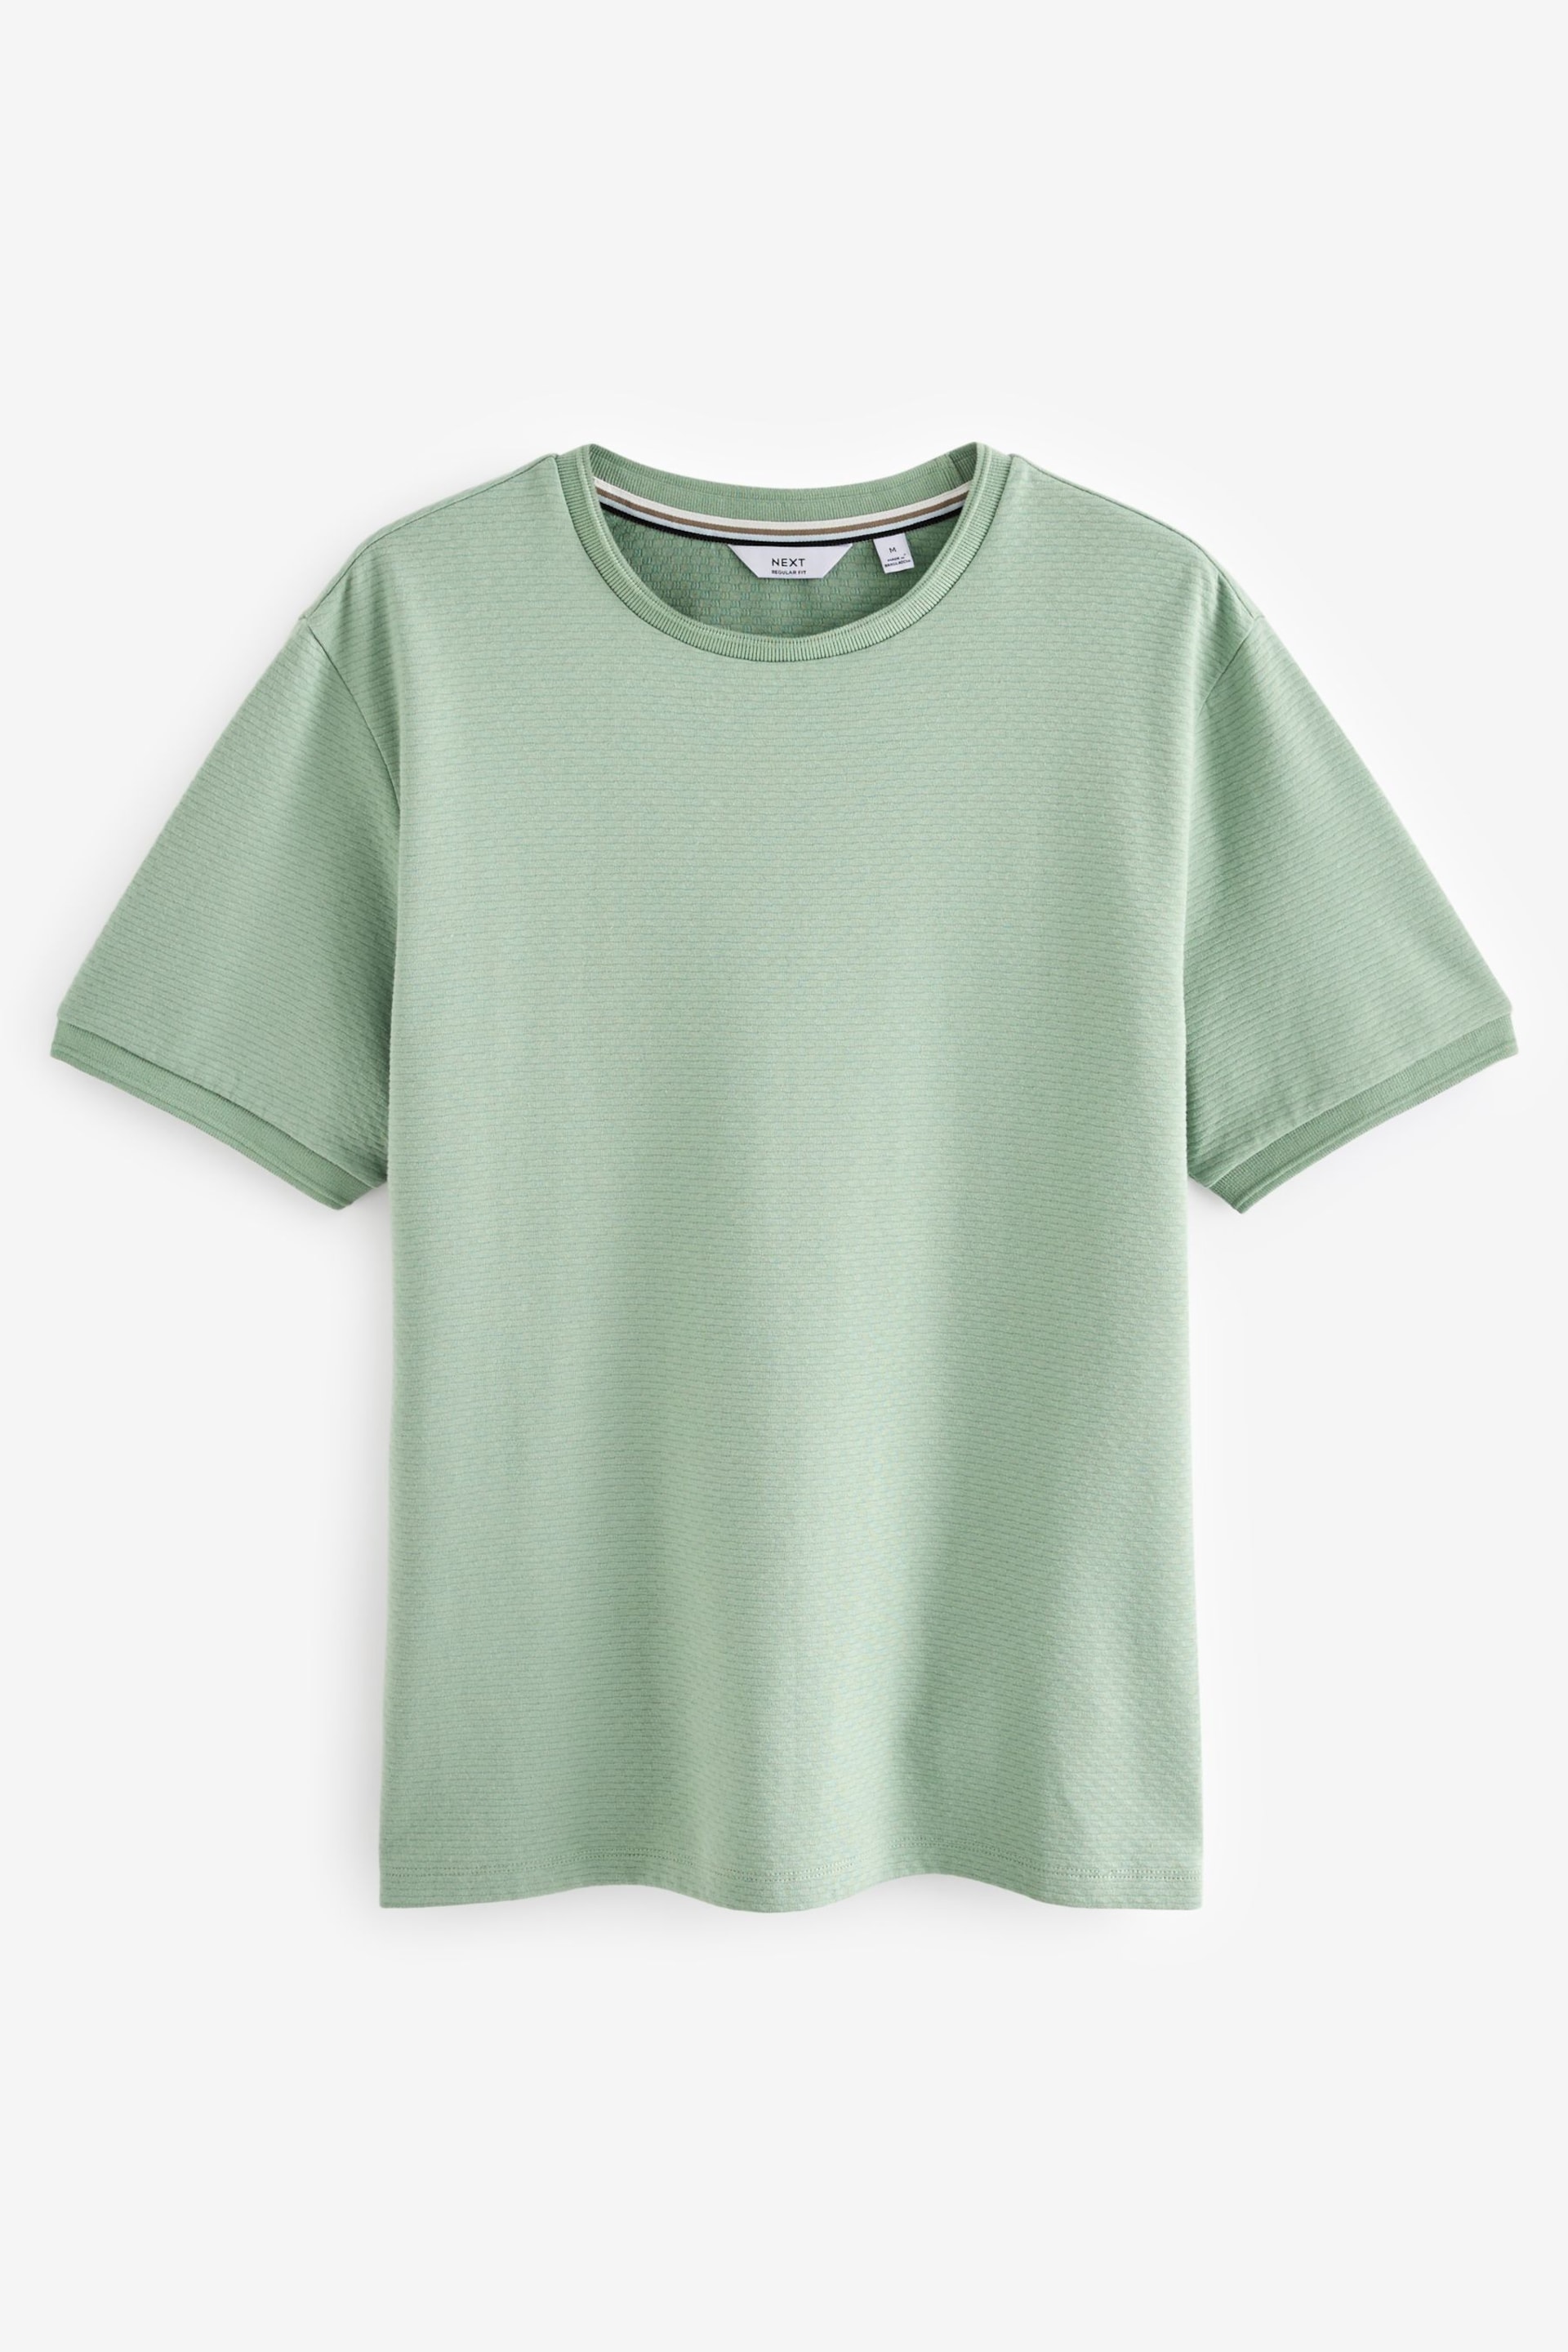 Sage Green Textured T-Shirt - Image 5 of 7